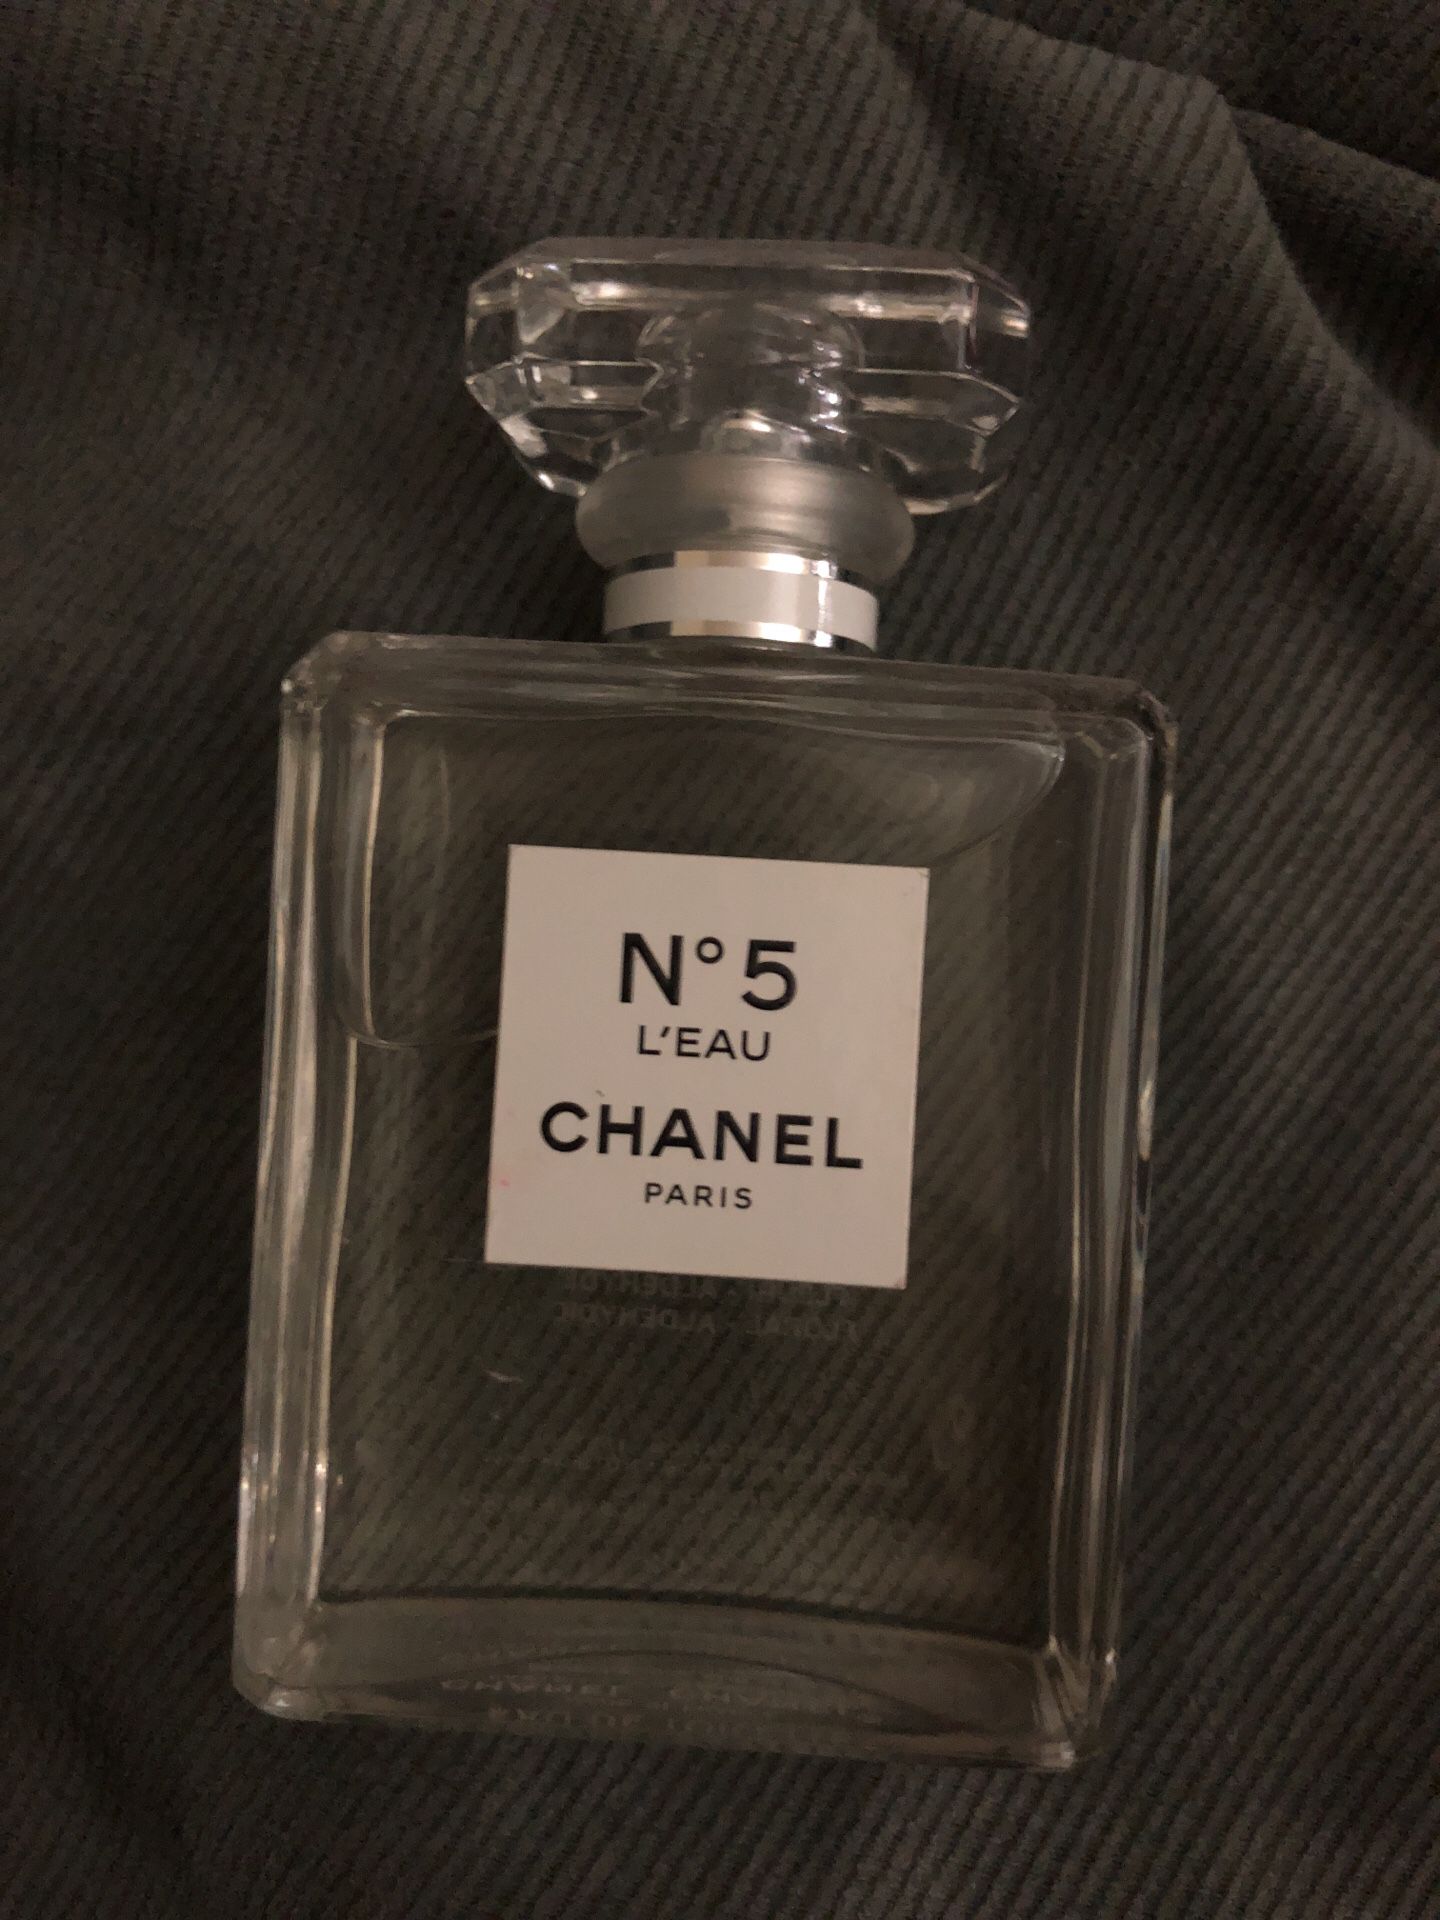 Chanel no. 5 perfume